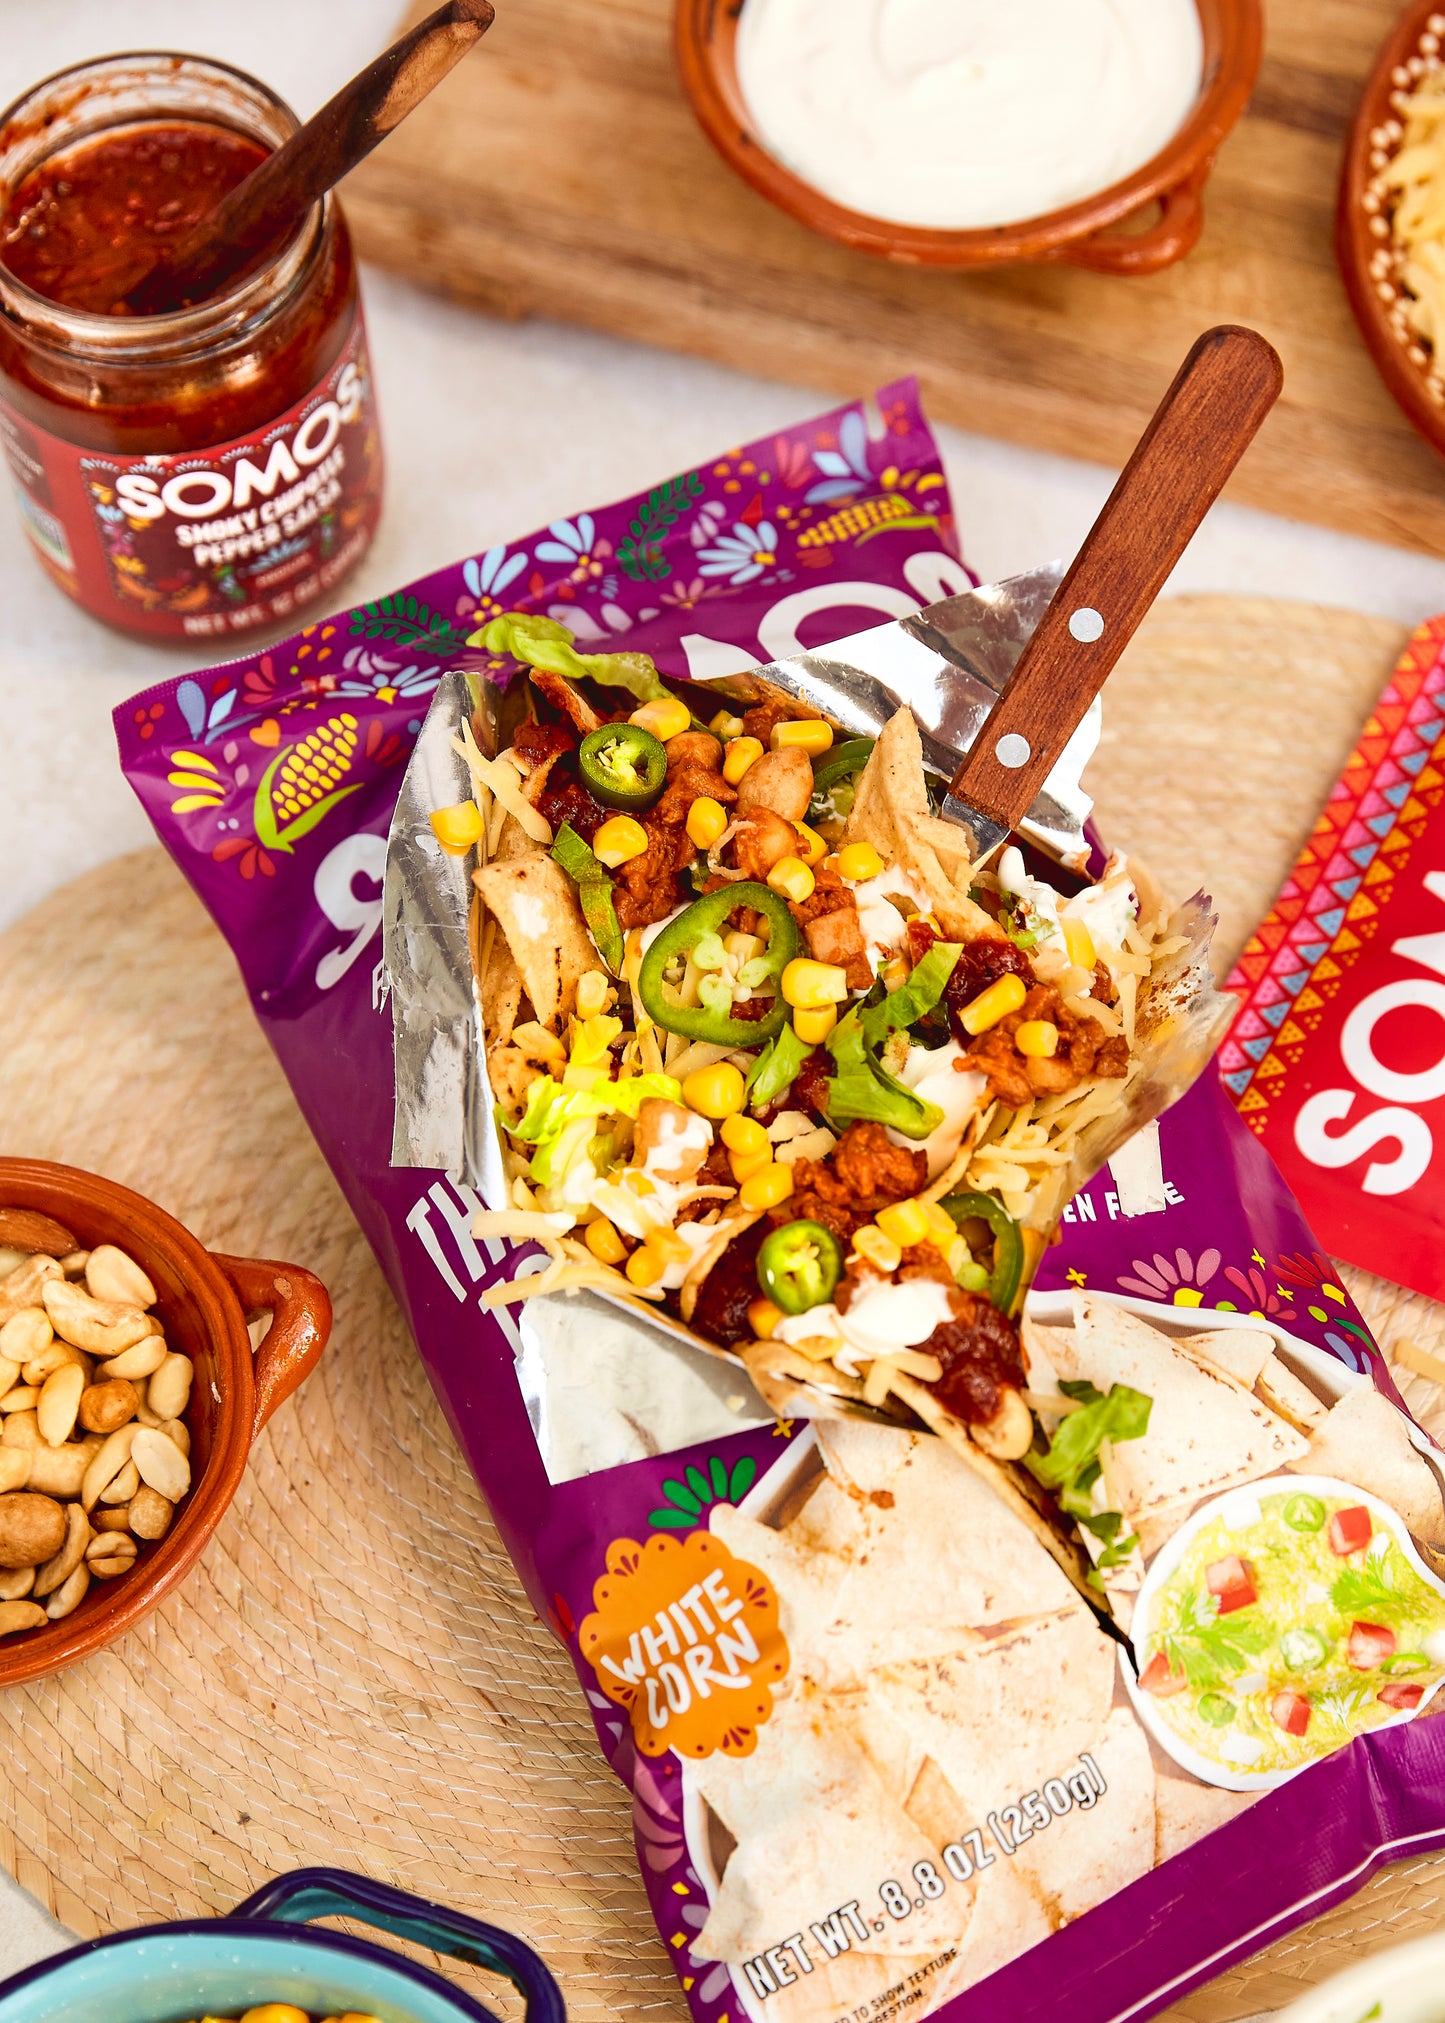 SOMOS Chips & Salsa Variety Kit